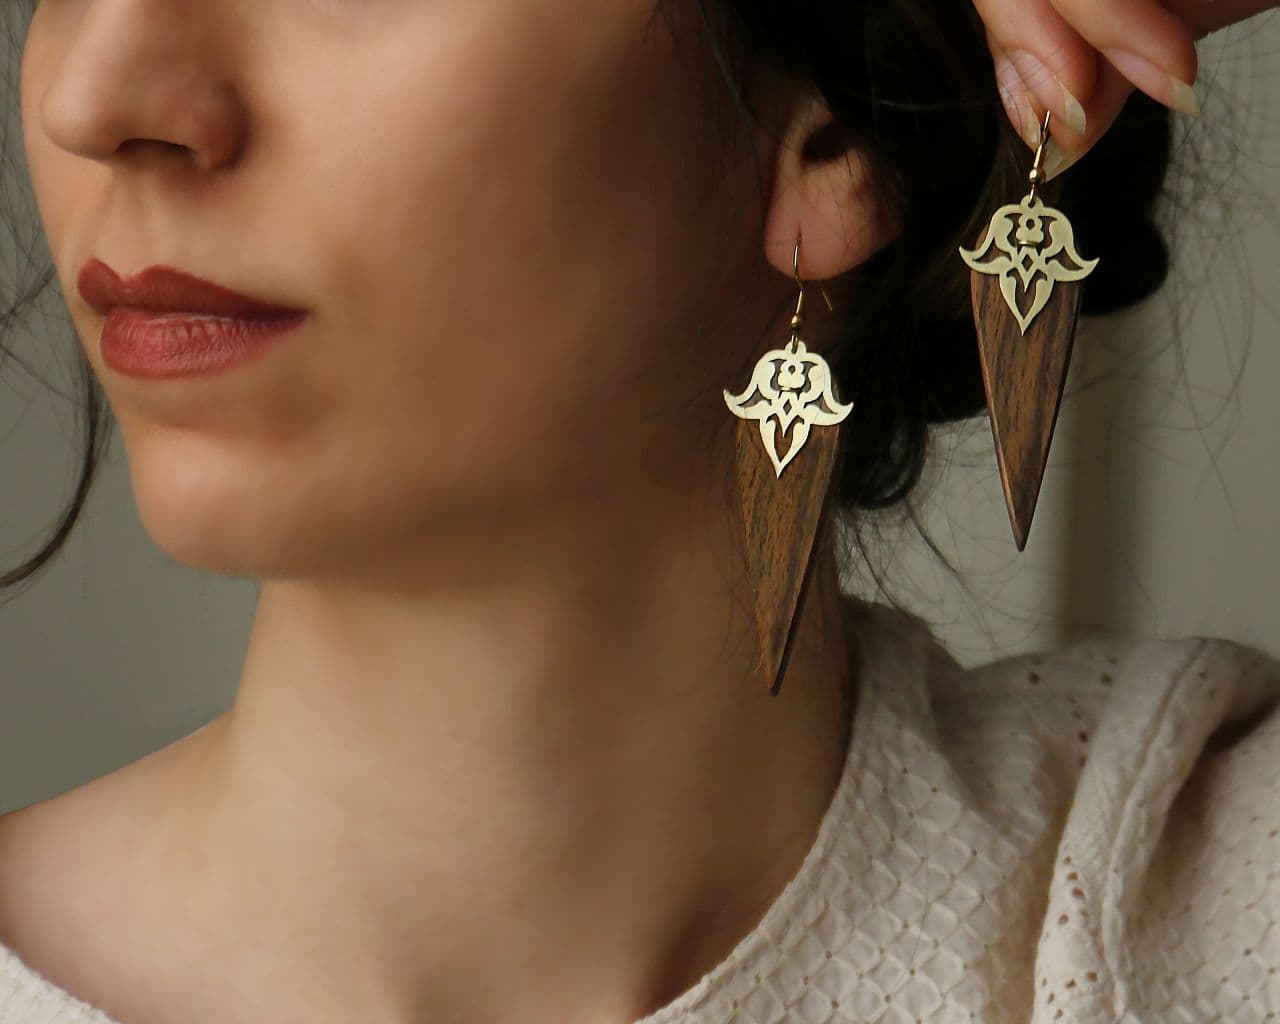 Mahoon Wood & Brass Earrings, Spike-Shaped - Yalda Concept Store Persan